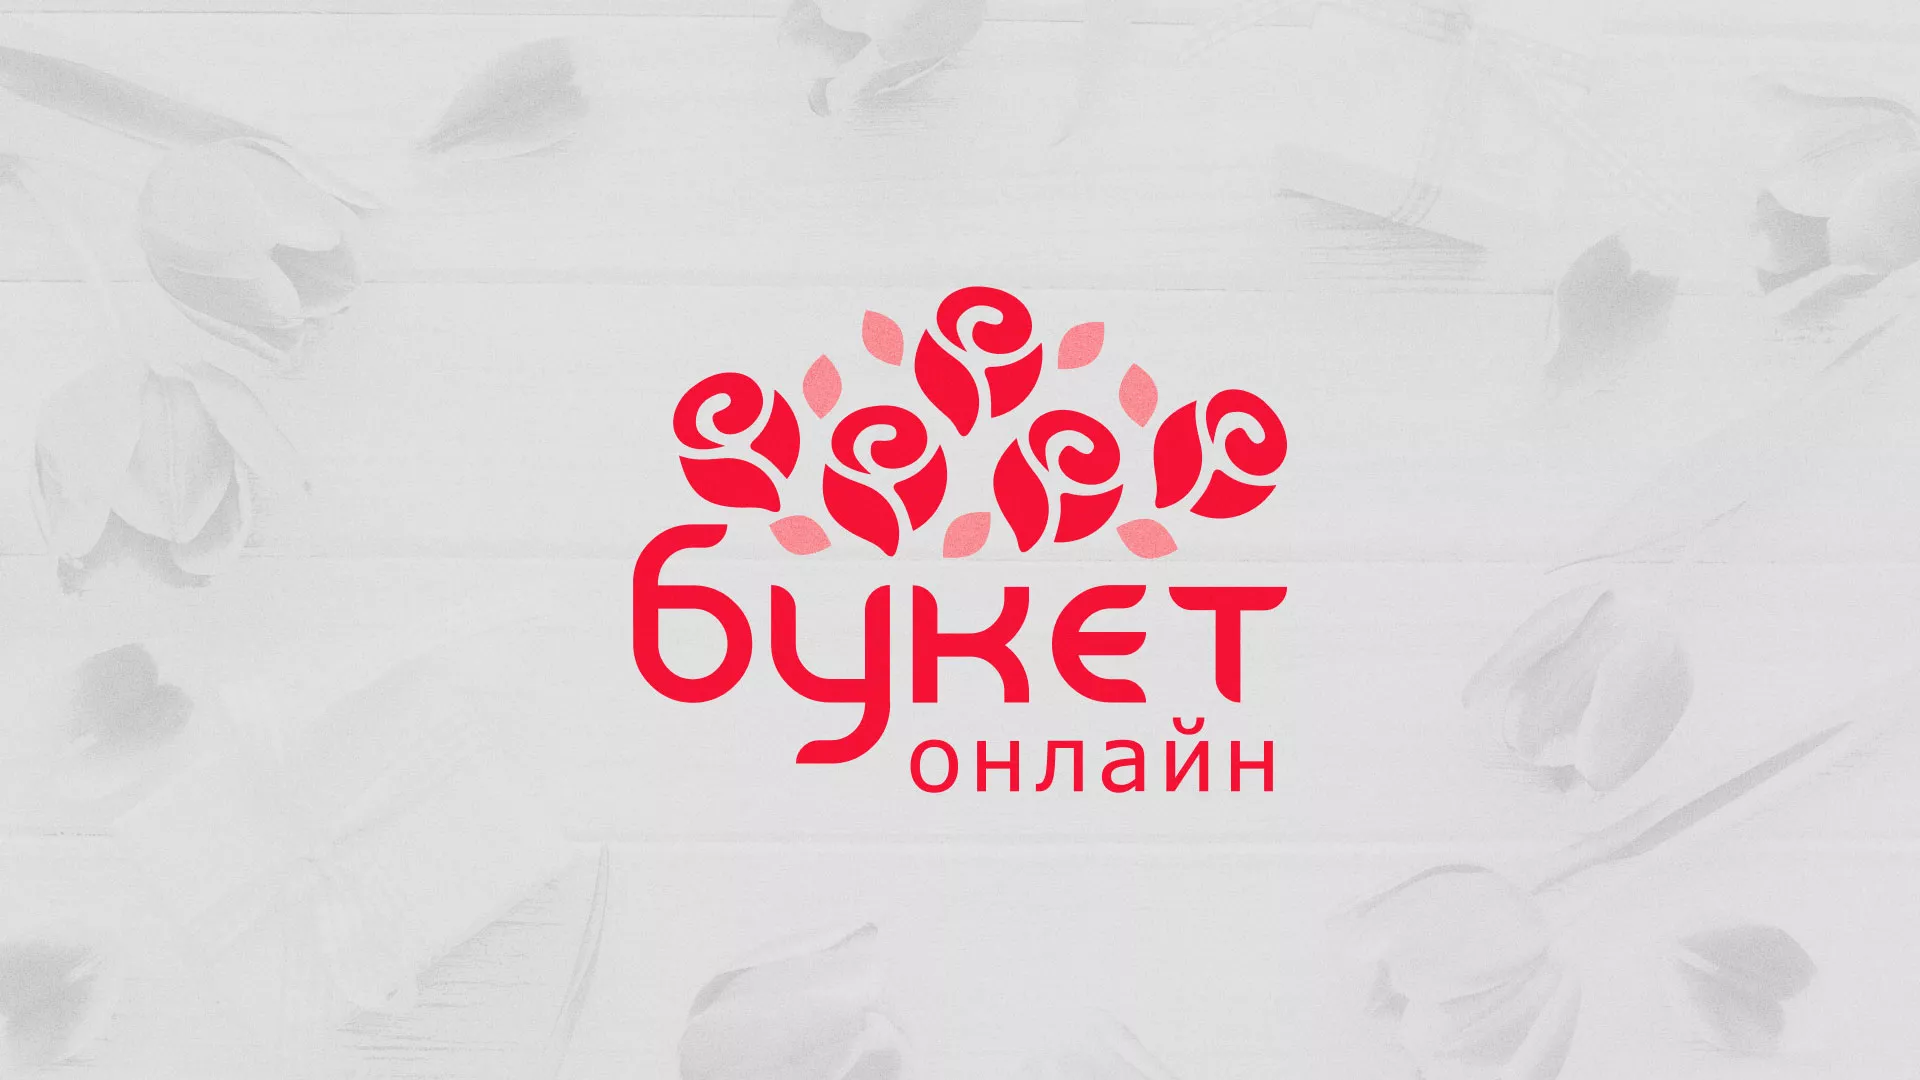 Создание интернет-магазина «Букет-онлайн» по цветам в Корсакове